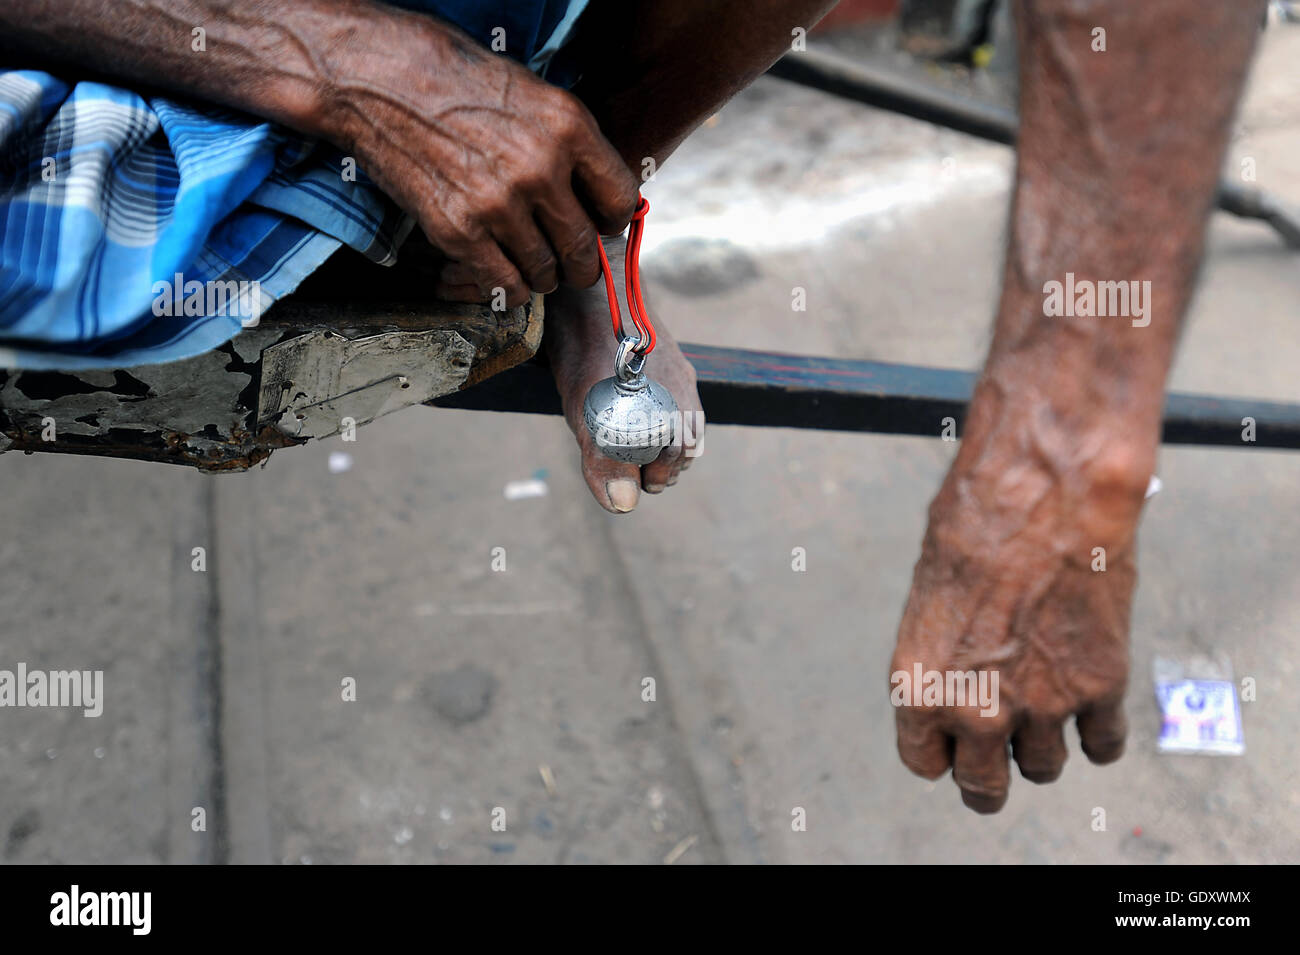 INDIA. Kolkata. 2011. In rickshaw estrattore Foto Stock